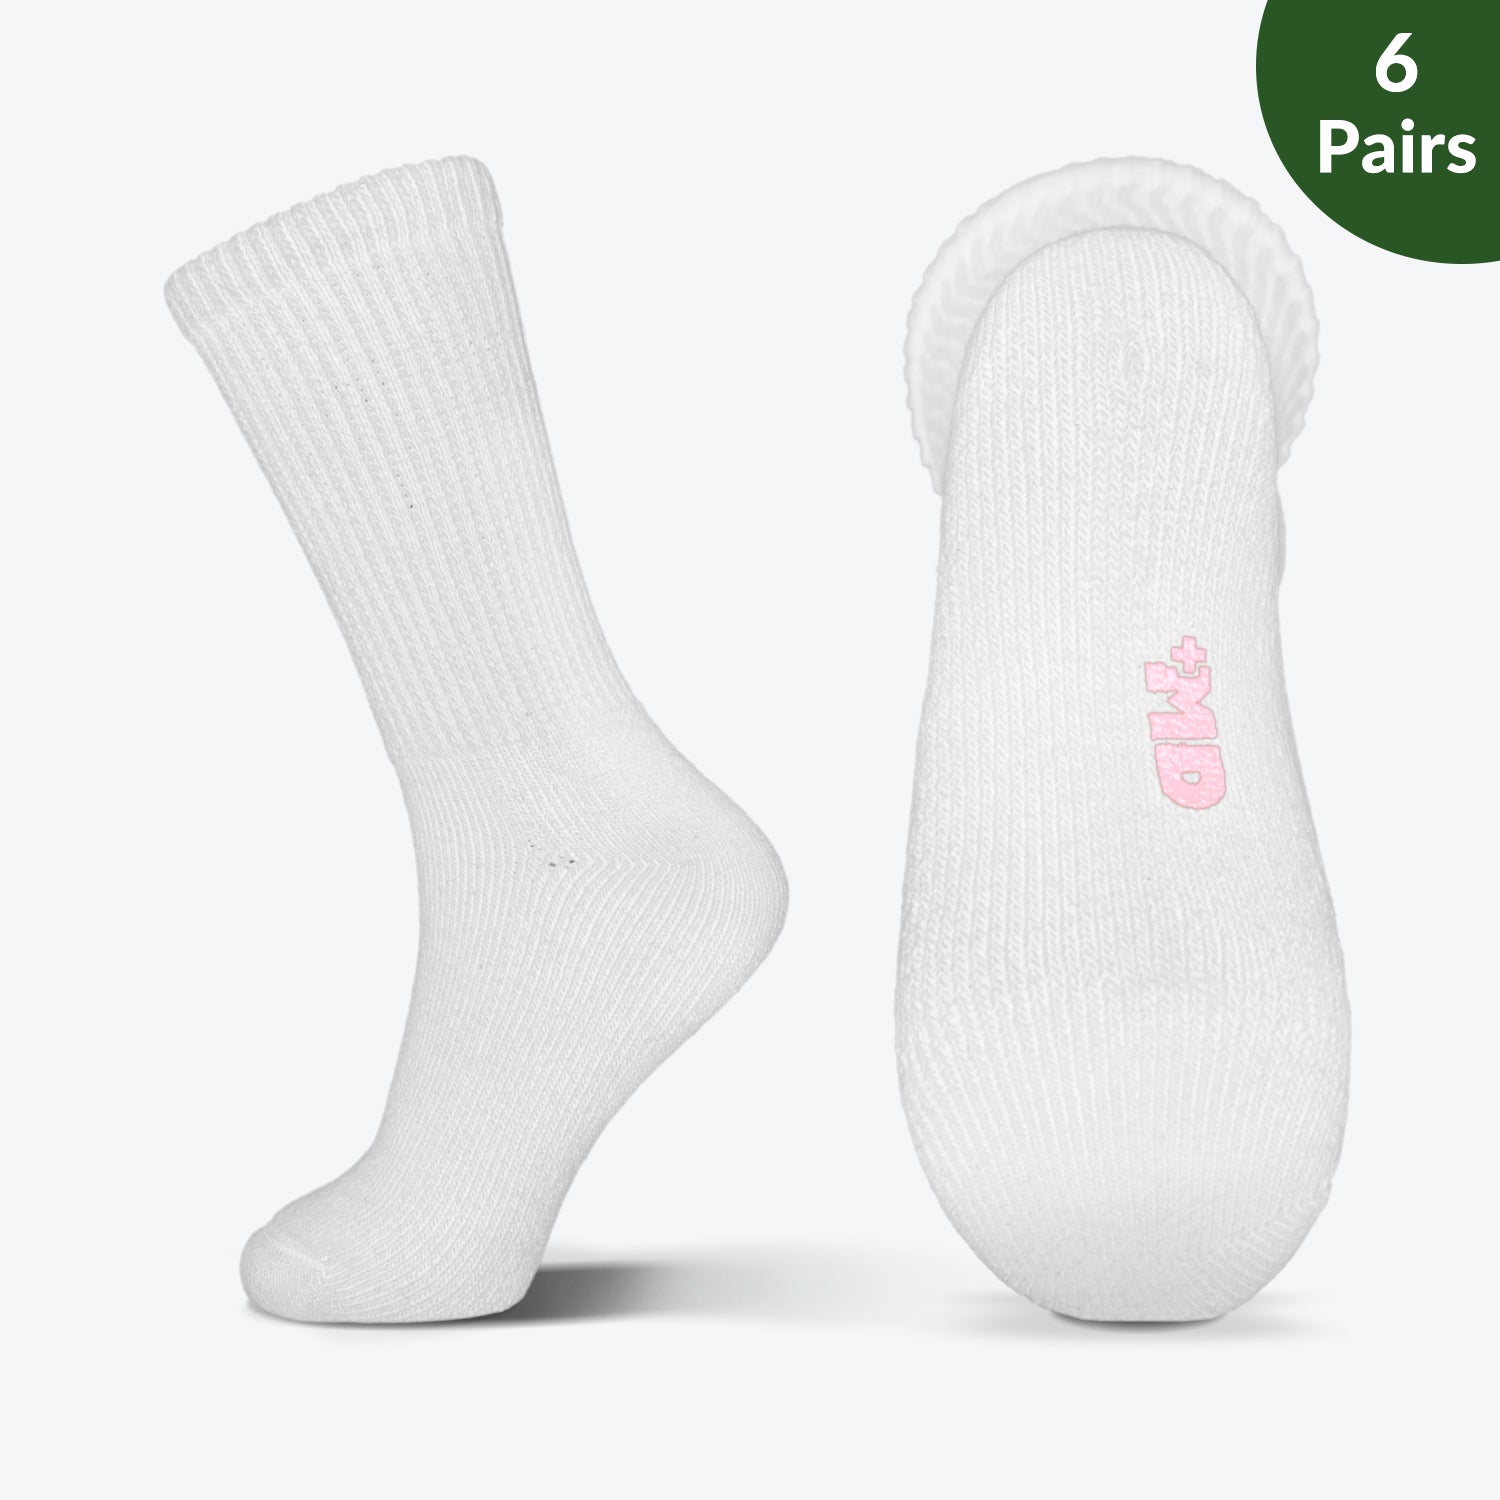 Comfort-Fresh | Diabetic Socks Shop Store